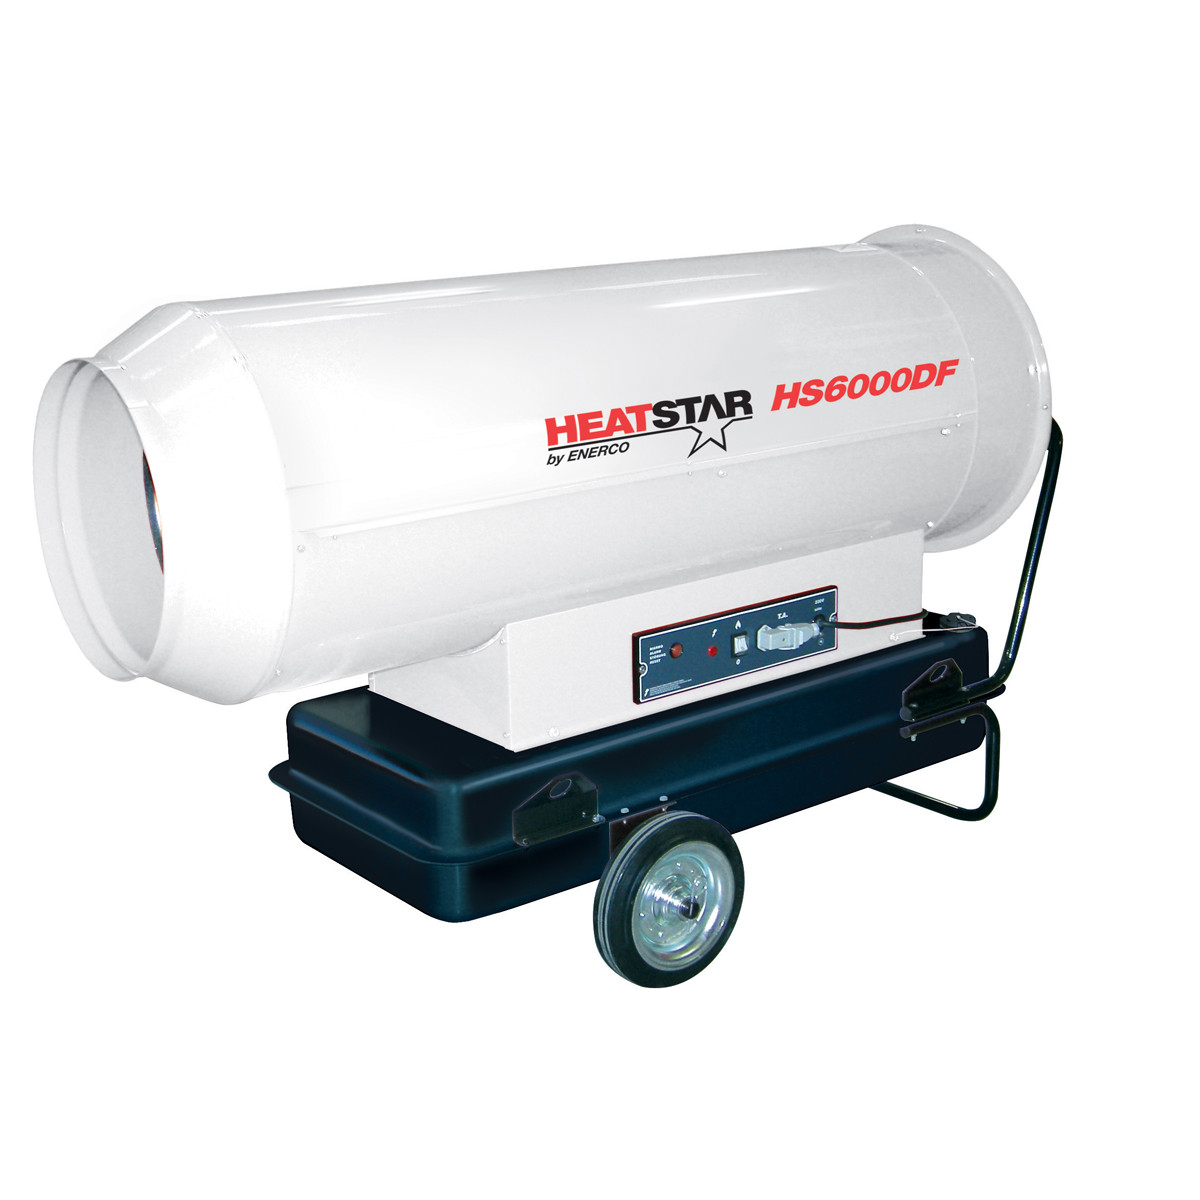 HeatStar 610,000 BTU Industrial Series Direct Fired Kerosene Heater